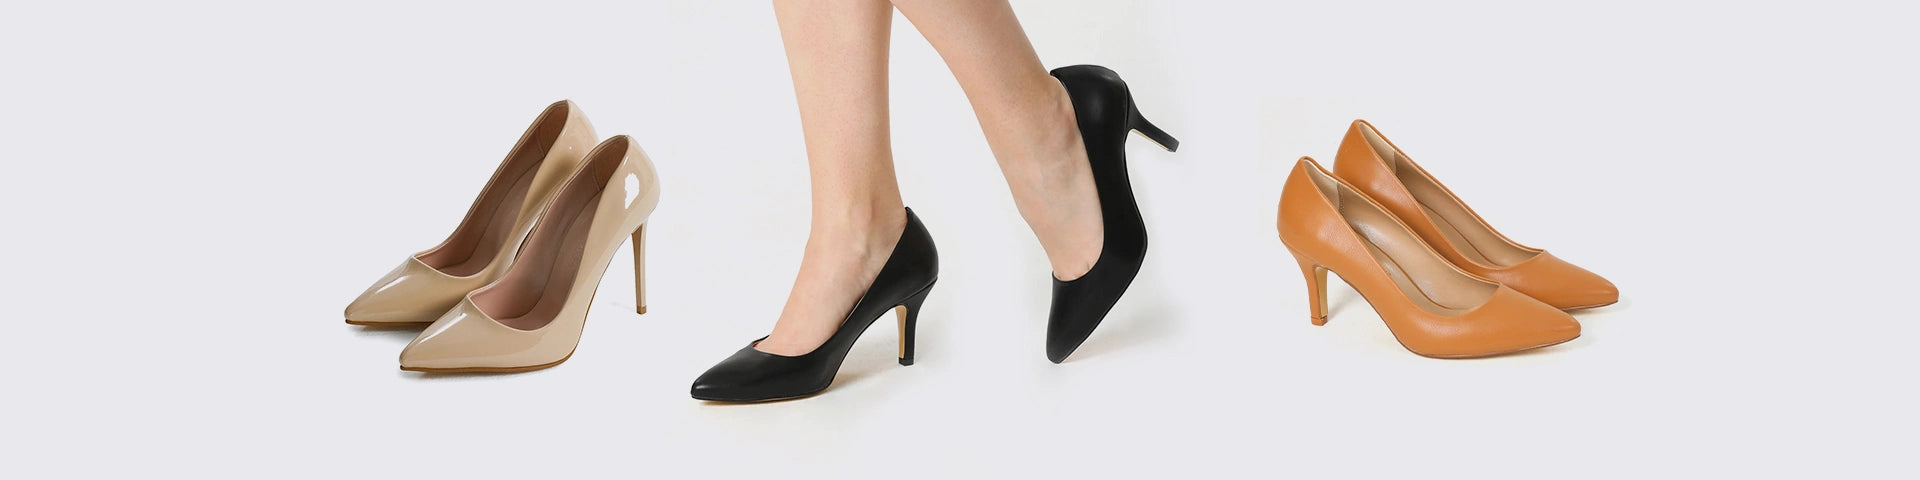 Womens High Stiletto Heels